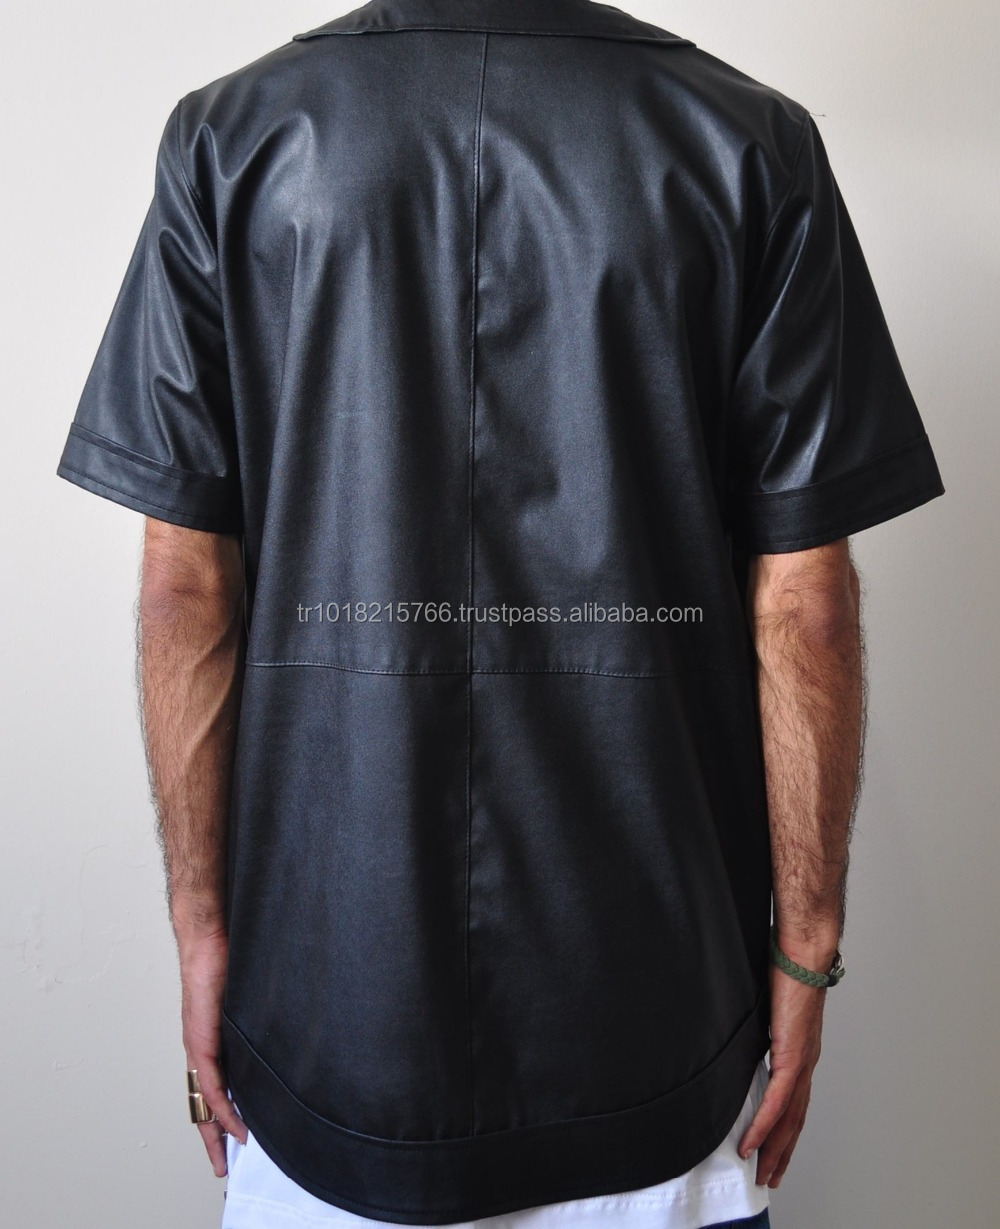 2016 new leather baseball jersey men fashion leather t-shirt top hip hop  men baseball t shirt uniform black top tee Plus Size - AliExpress